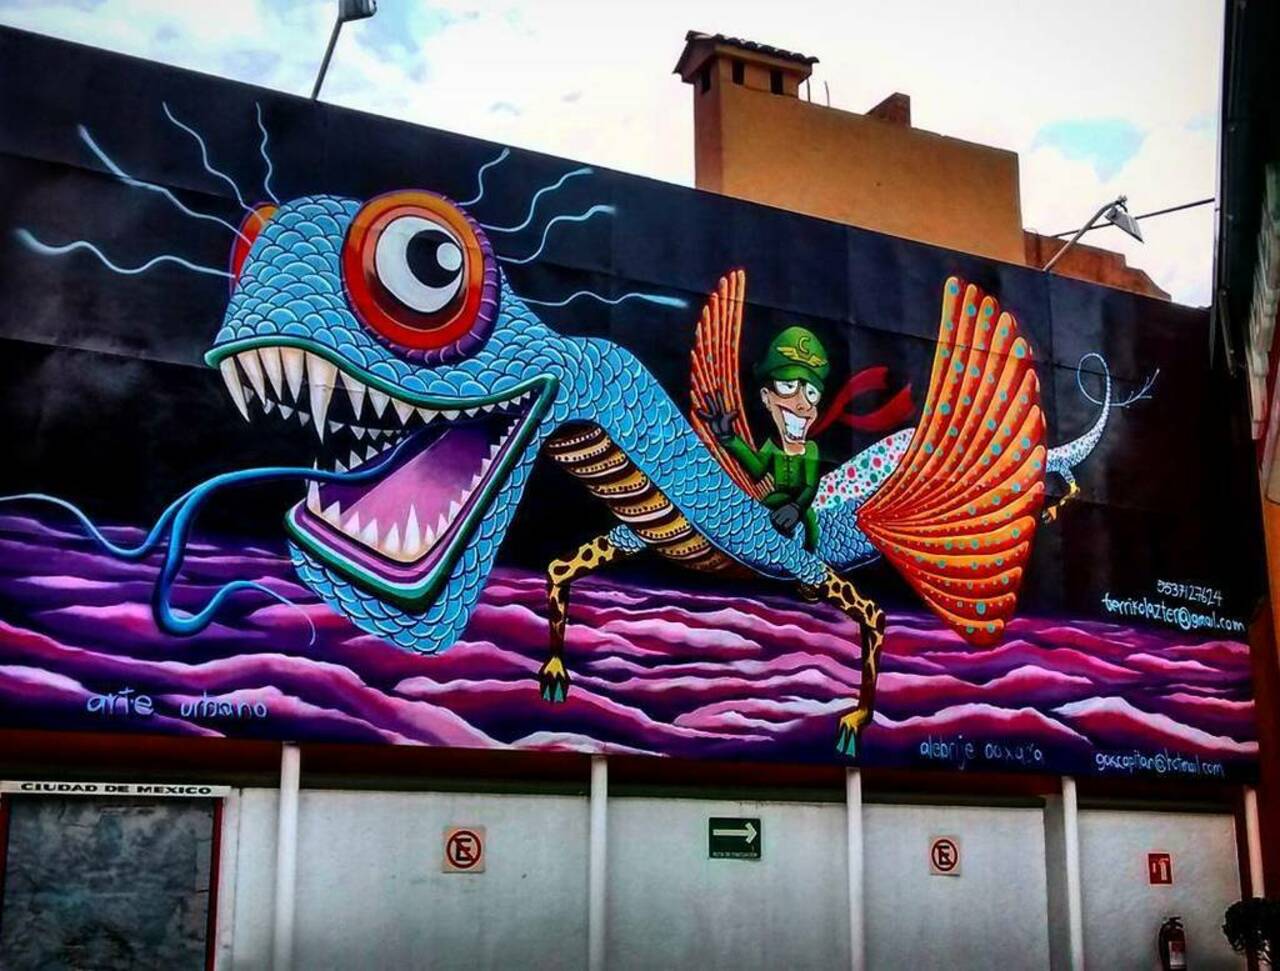 RT @artpushr: via #joseramosrebollo "http://ift.tt/1iDC4jd" #graffiti #streetart http://t.co/HDVCqAdm8h